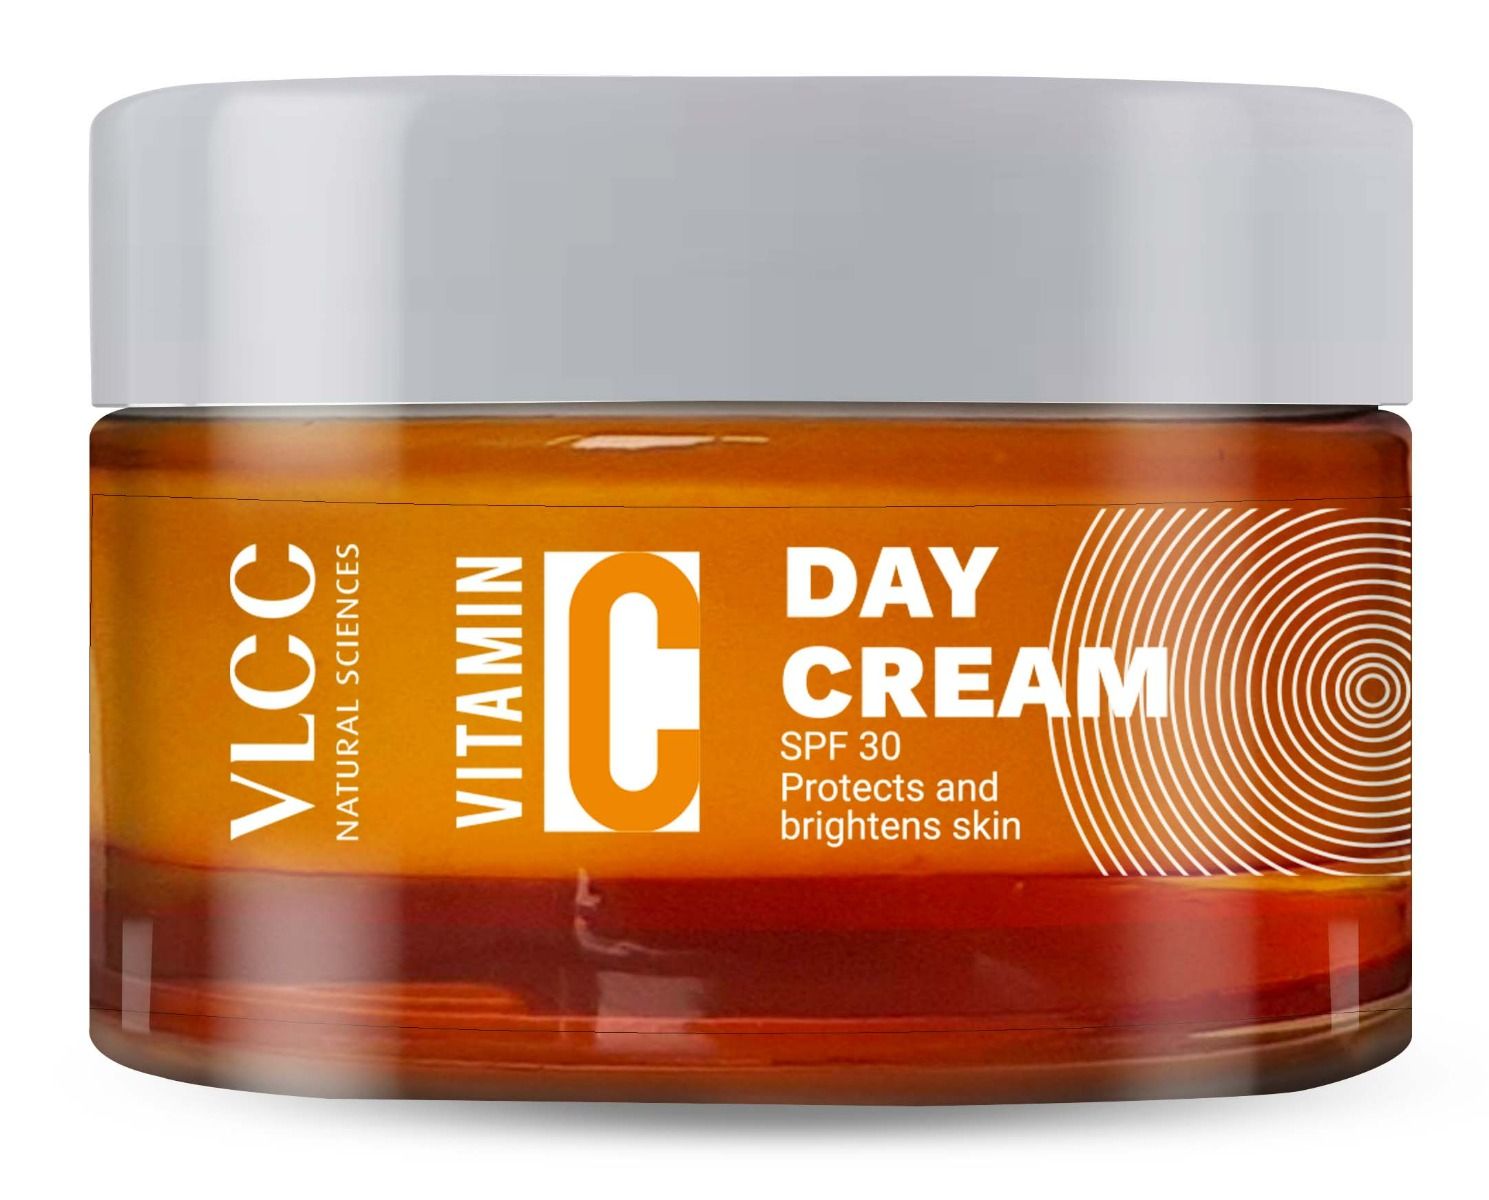 VLCC Vitamin C SPF 30 Day Cream, 50 gm, Pack of 1 